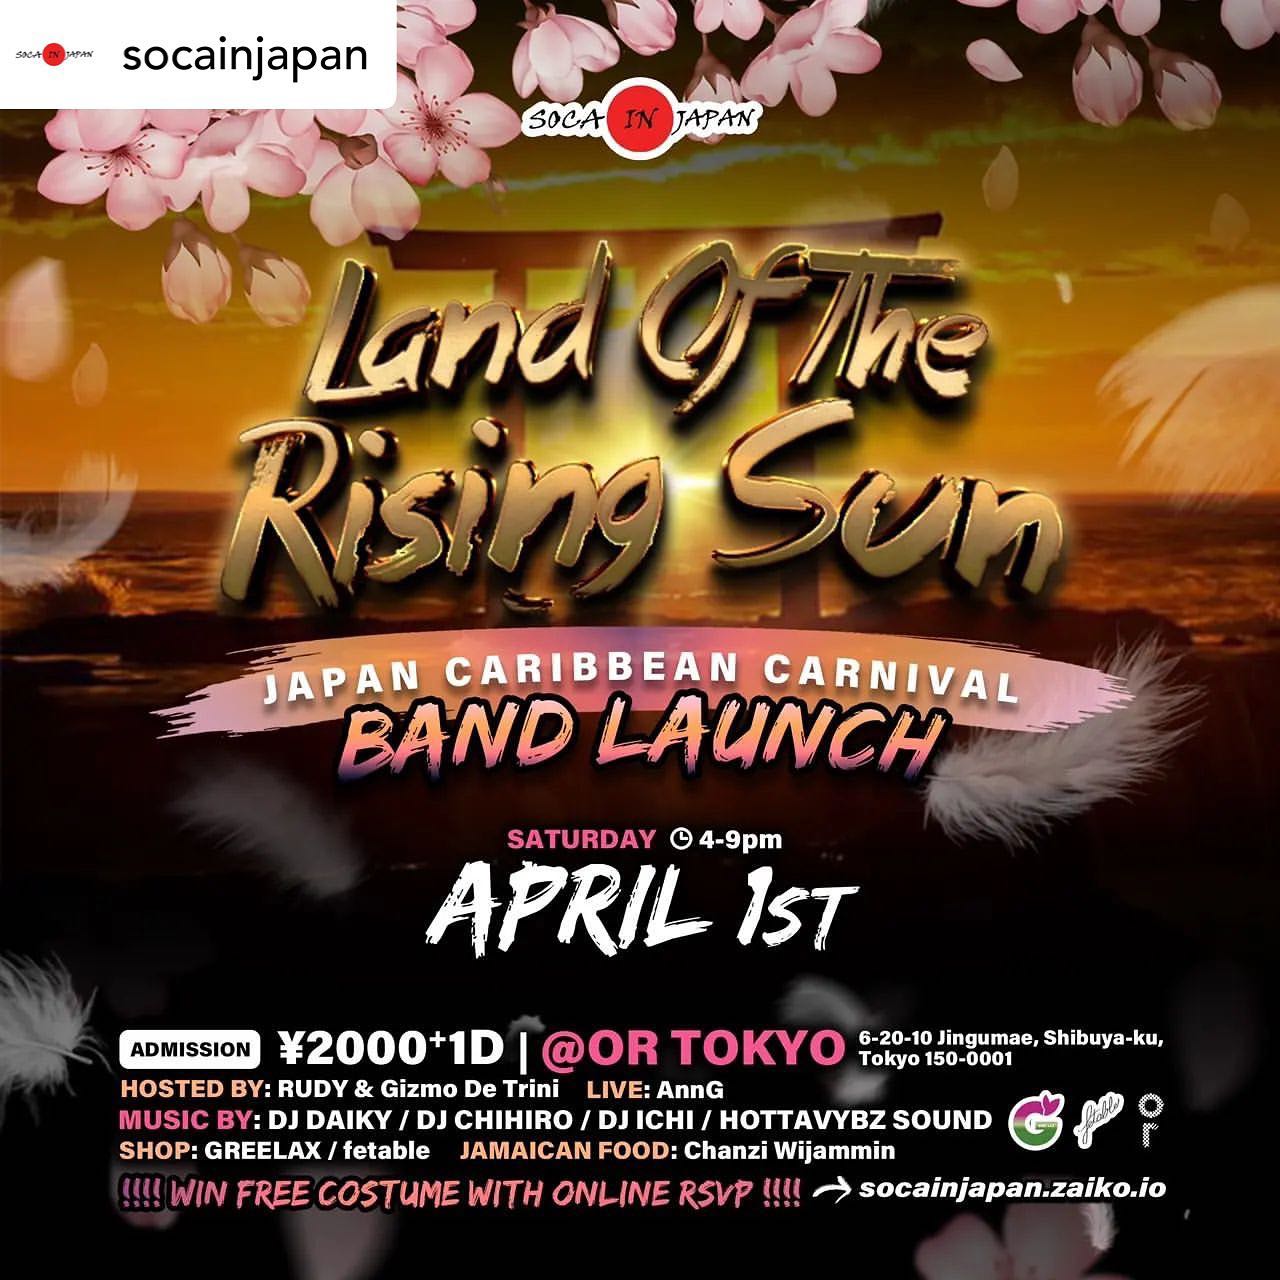 • @socainjapan [ ️]Soca in Japan presents
Japan Caribbean Carnival
Band Launch party
Land of the Rising Sun

SAT April 1st @ 1600 ~ 2100

Hosted by 
@gizmodetrini
@djrudyjpn

 Music by 
@djdaiky 
@djheatjapan 
@chihirochiba 
@djichi777 

🎙️LIVE 🎙️
@anng_music
@gizmodetrini

Jamaican FOOD 
@chanzi_the_1

SHOPS 
@cbd_greelax_
@fetable

Enter to win a free Japan Caribbean Carnival costume with online ticket order. 

Tickets  
¥2000+1D
Available at Door
or socainjapan.zaiko.io

Location: 
OR TOKYO 
6-20-10 Jingumae, Shibuya-ku, Tokyo 150-0001

4月1日(土)16:00～21:00 
@or tokyo

Japan Caribbean Carnivalの衣装展示会「バンドローンチ」開催！！！
 
SOCA IN JAPANが仕掛ける2023年のカーニバルの、公式コスチュームを初披露！

衣装の全パターンをファッションショースタイルでいち早くご覧いただけます。

その場で予約も可能。

豪華なDJ陣のプレイも必聴！

  オンラインでチケットを購入いただいた方の中から抽選で、Japan Caribbean Carnival 2023のコスチュームをお一人様にプレゼント

[Japan Caribbean Carnivalとは？]

トリニダード・トバゴを中心とするカリブの島々のお祭り、カーニバル。

その日本版を日本で開催！遊び尽くして灰になろう！

Japan Caribbean Carnivalは、
@JapanSocaWeekendの最後、9/18に開催されます。

本場さながらにサウンドシステムをトラックに積み、
屋外にて飲みながら踊りながら音楽を楽しめます。
カリビアンフードも楽しめます。

日本初となるカリビアンスタイルのカーニバルをお見逃しなく！ ！ ！

#ソカインジャパン #ジャパンカリビアンカーニバル